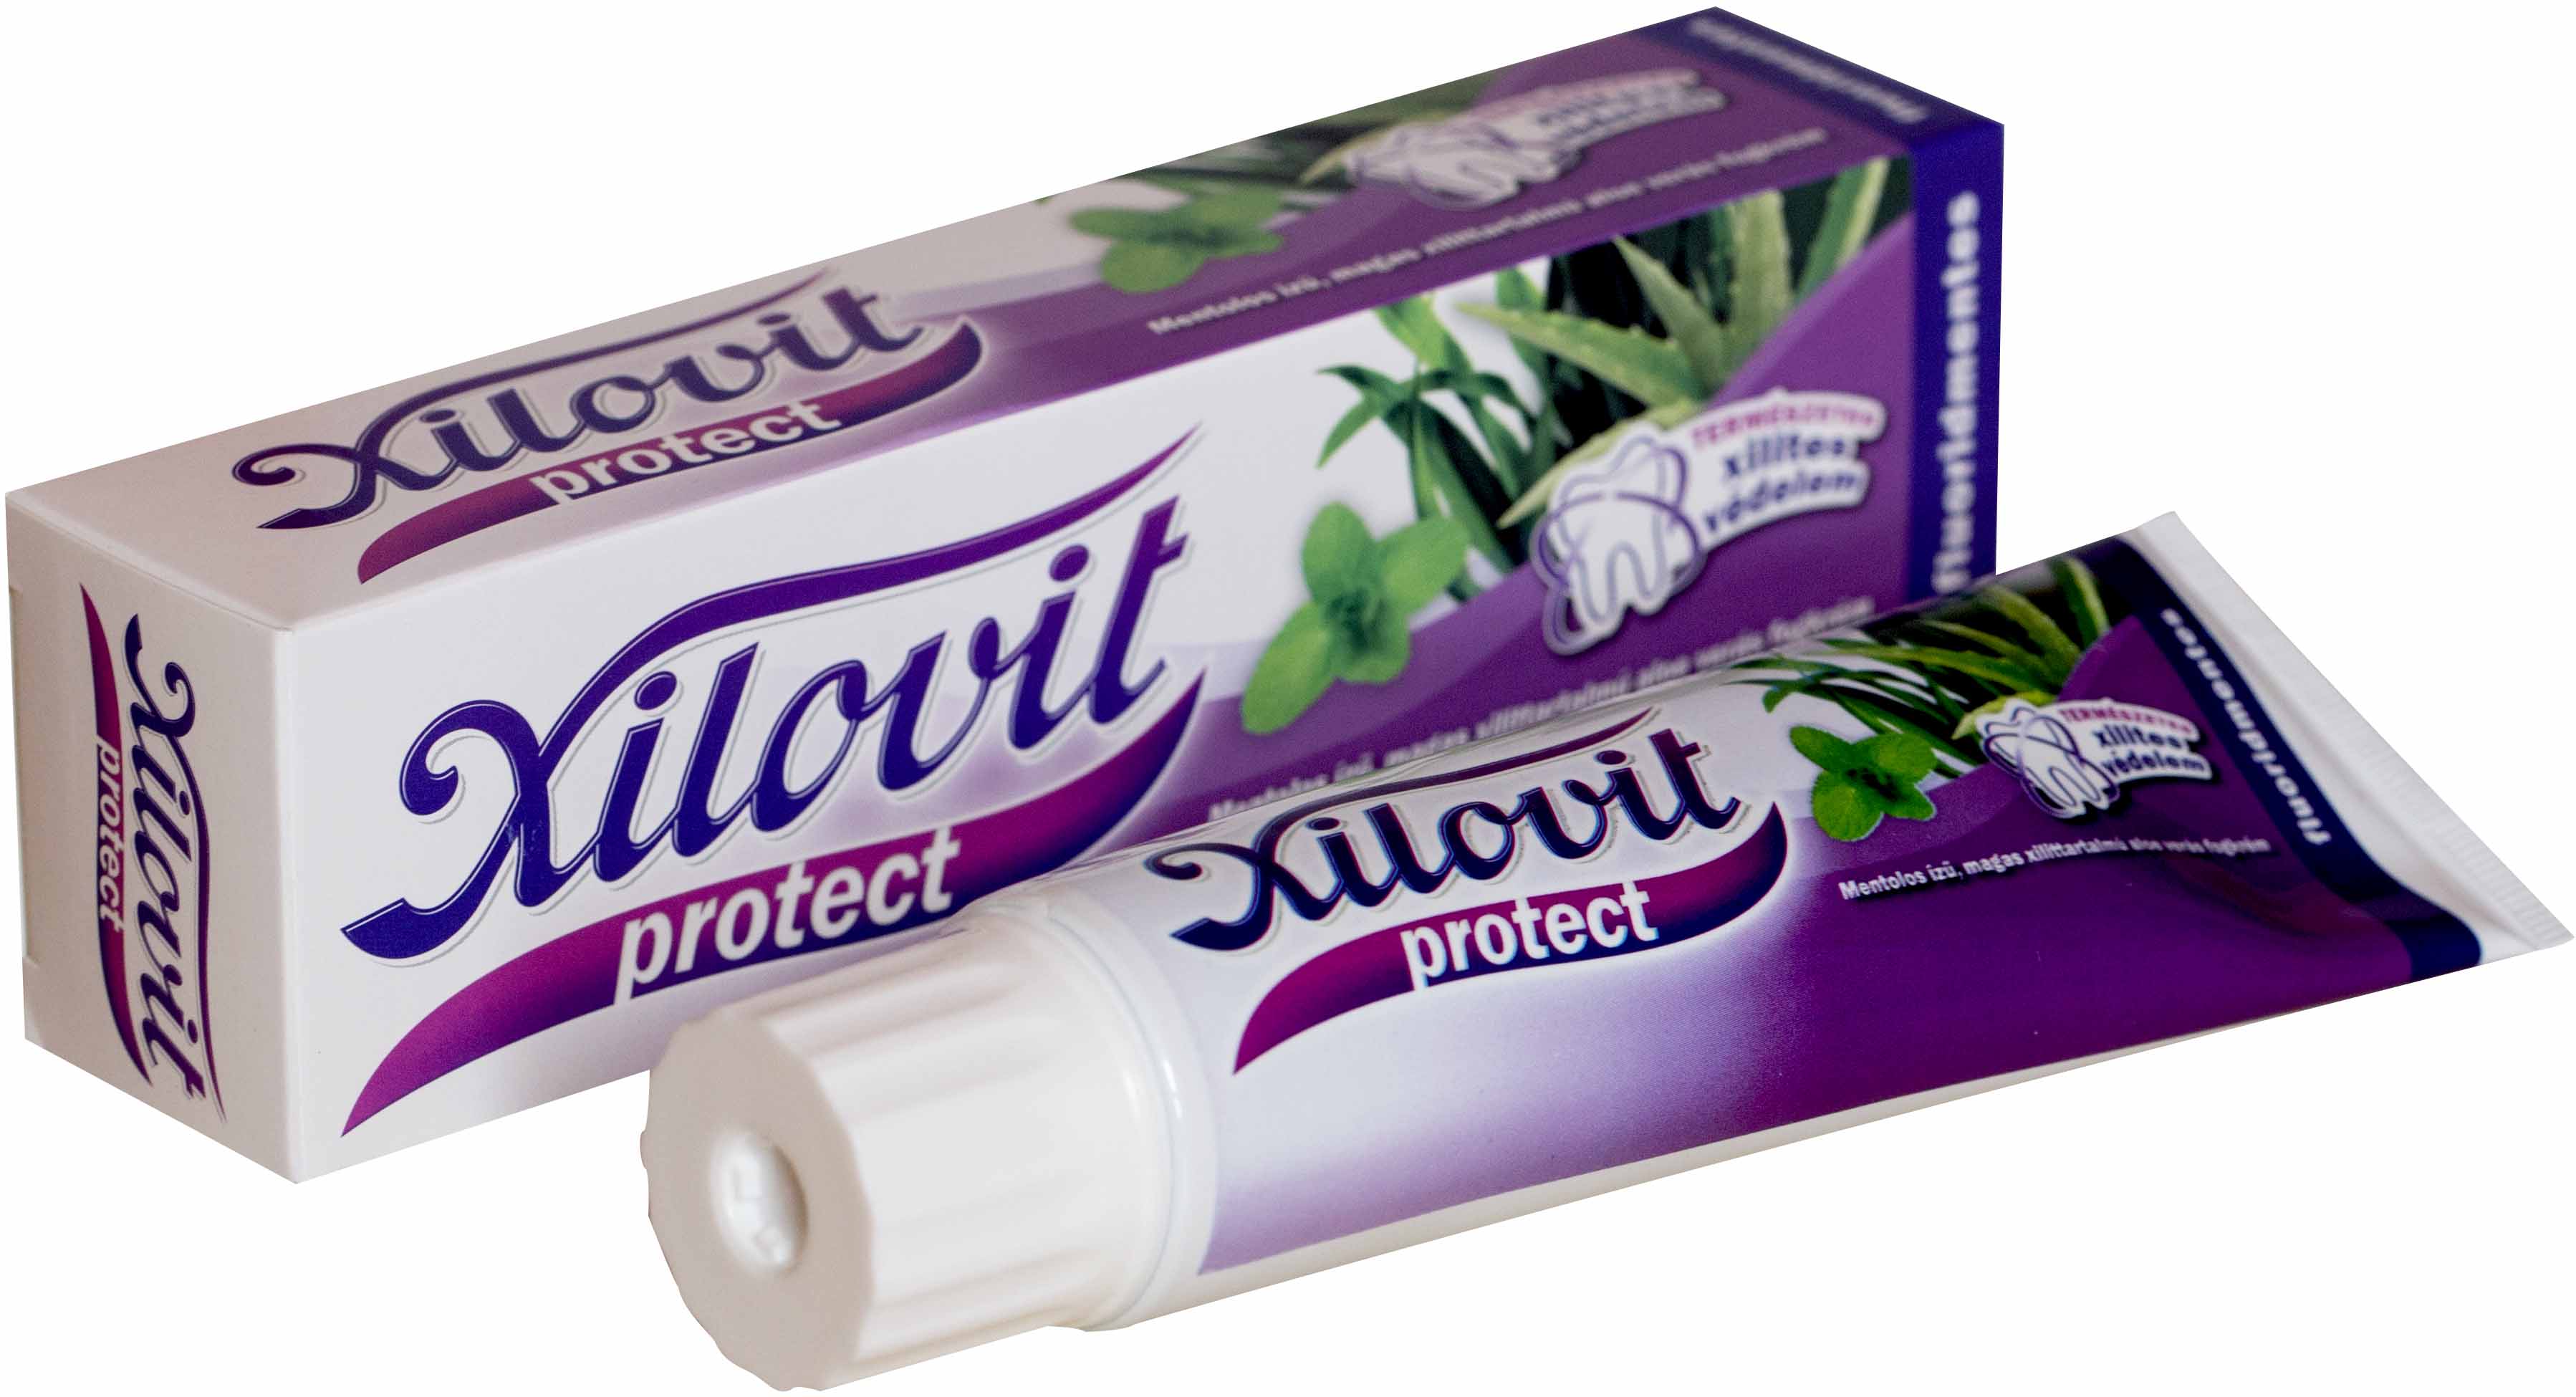 Xilovit Protect